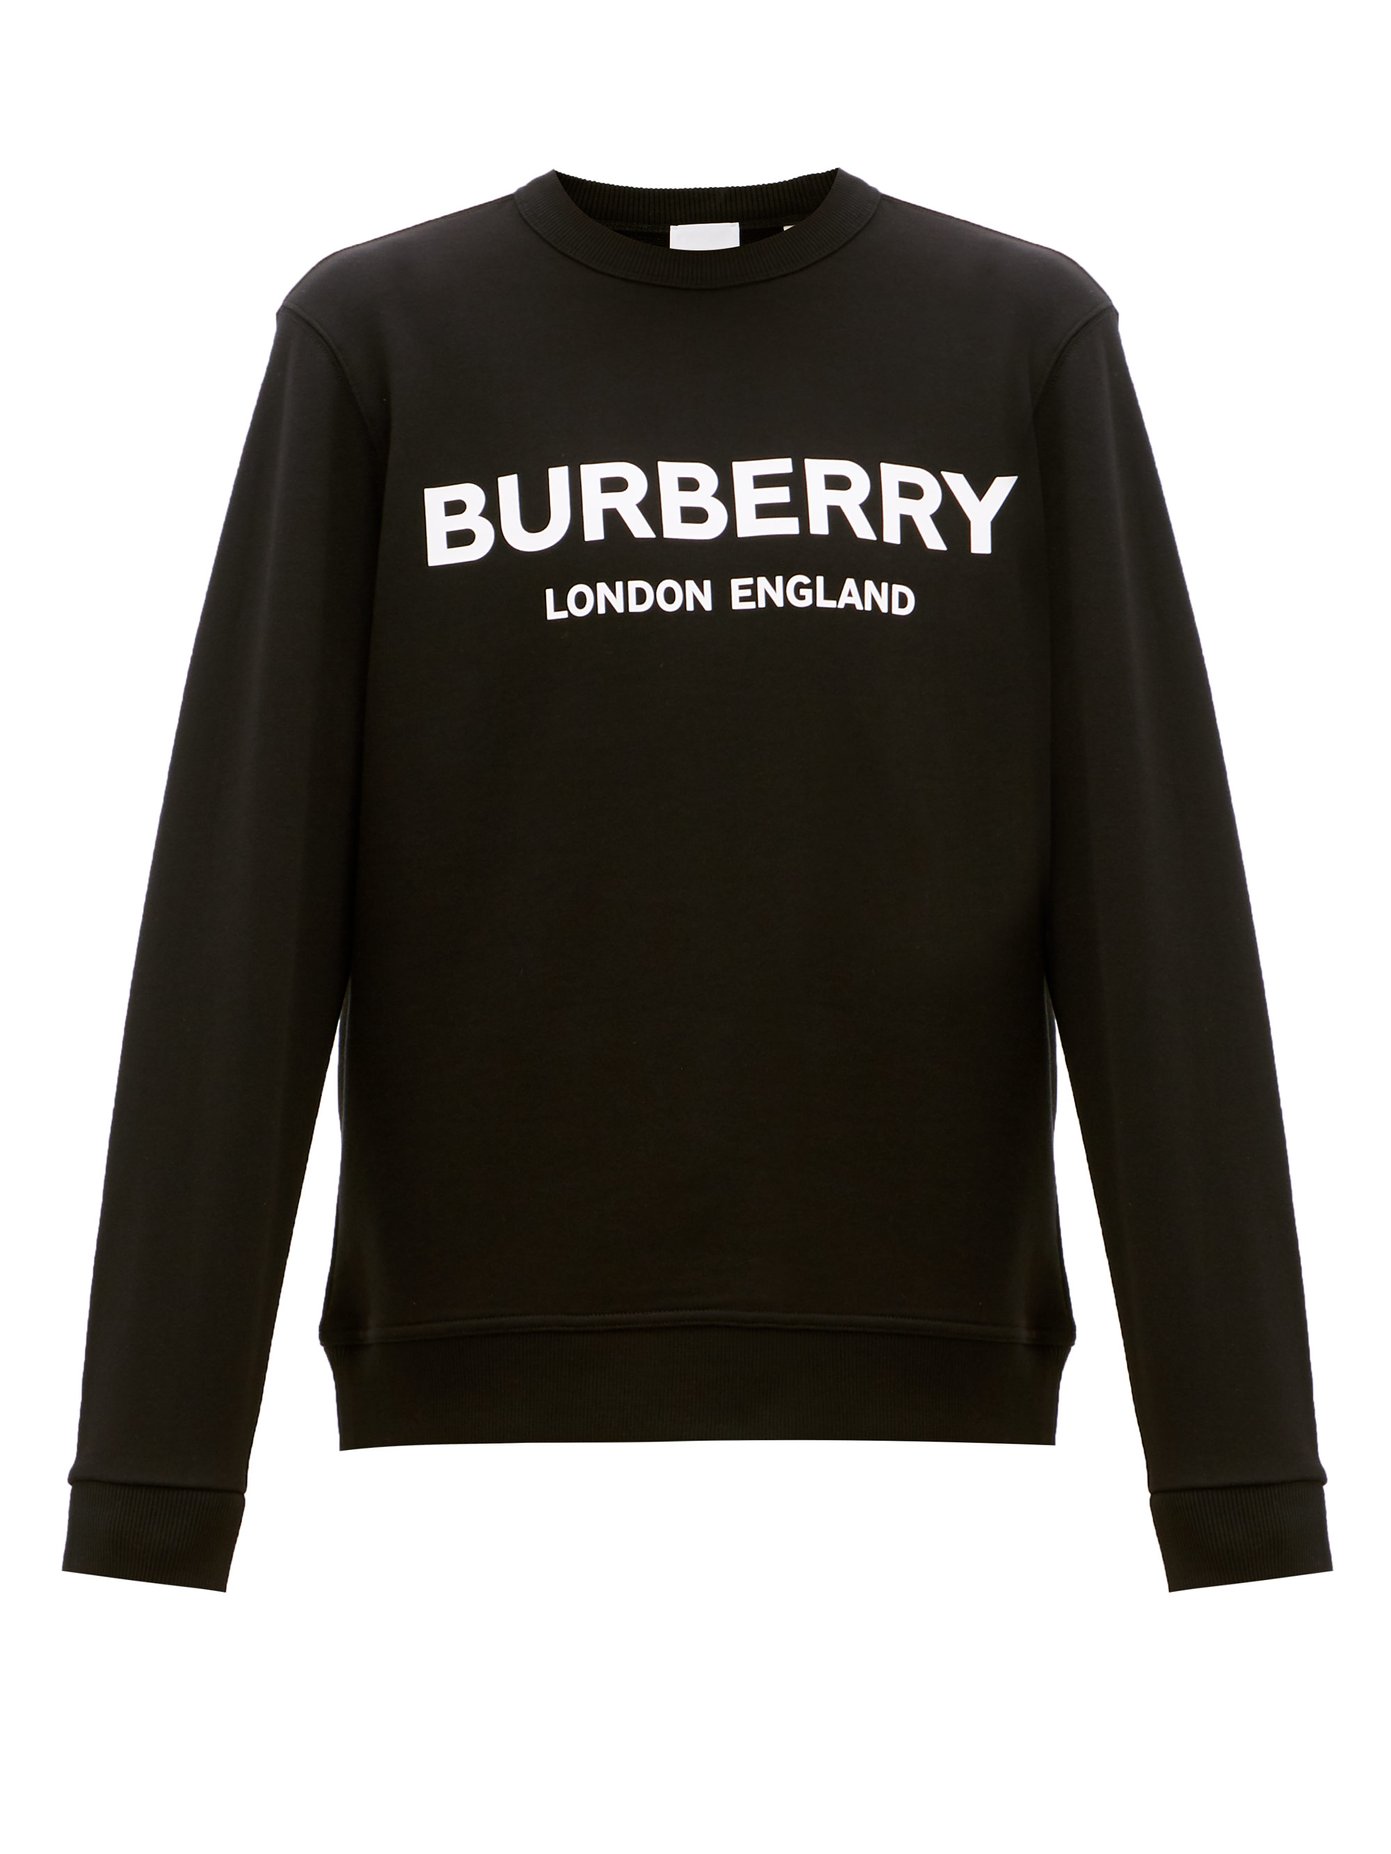 grey burberry sweater